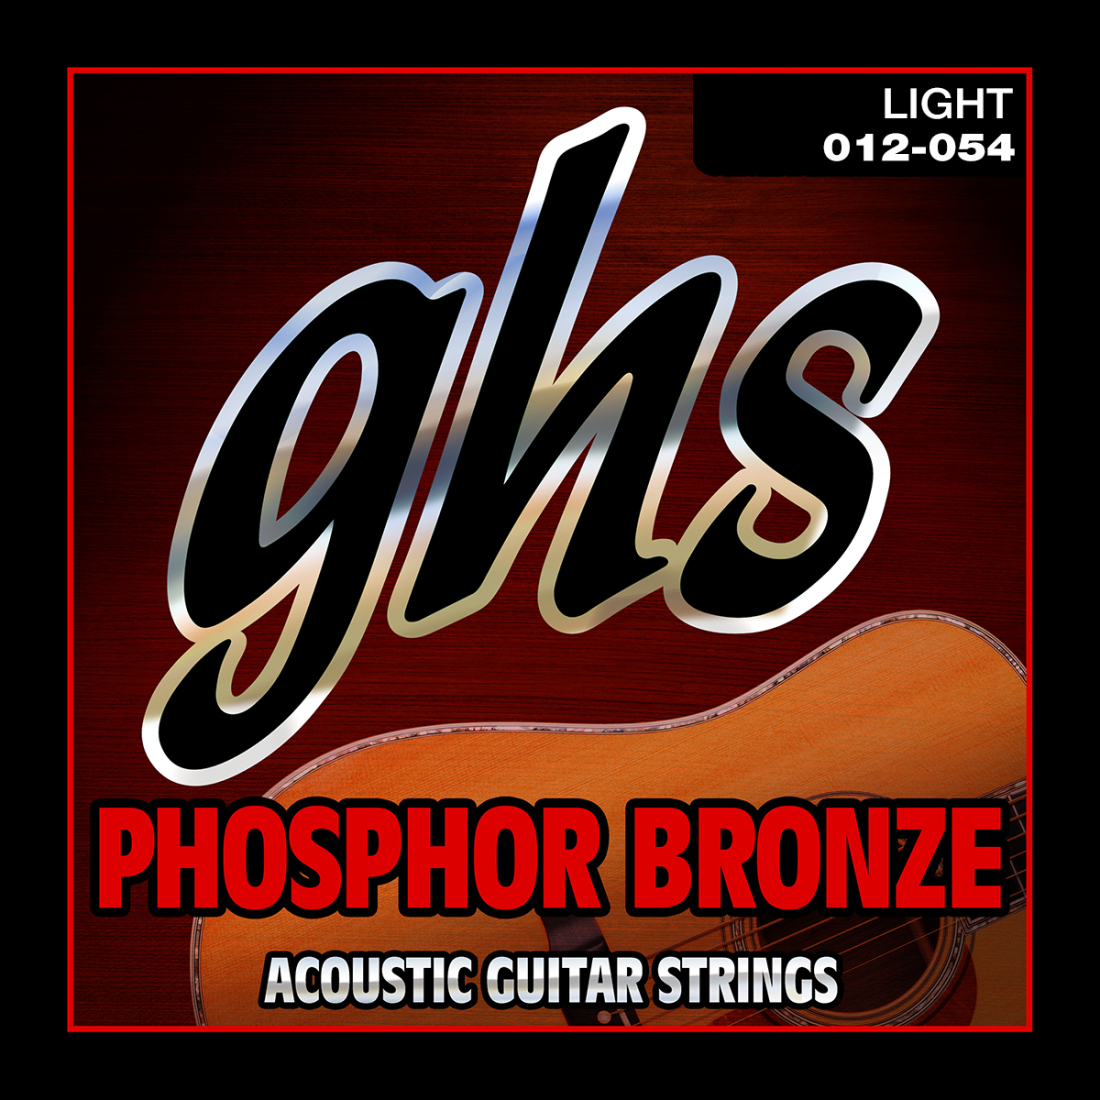 Phosphor Bronze Acoustic Guitar Strings - Light